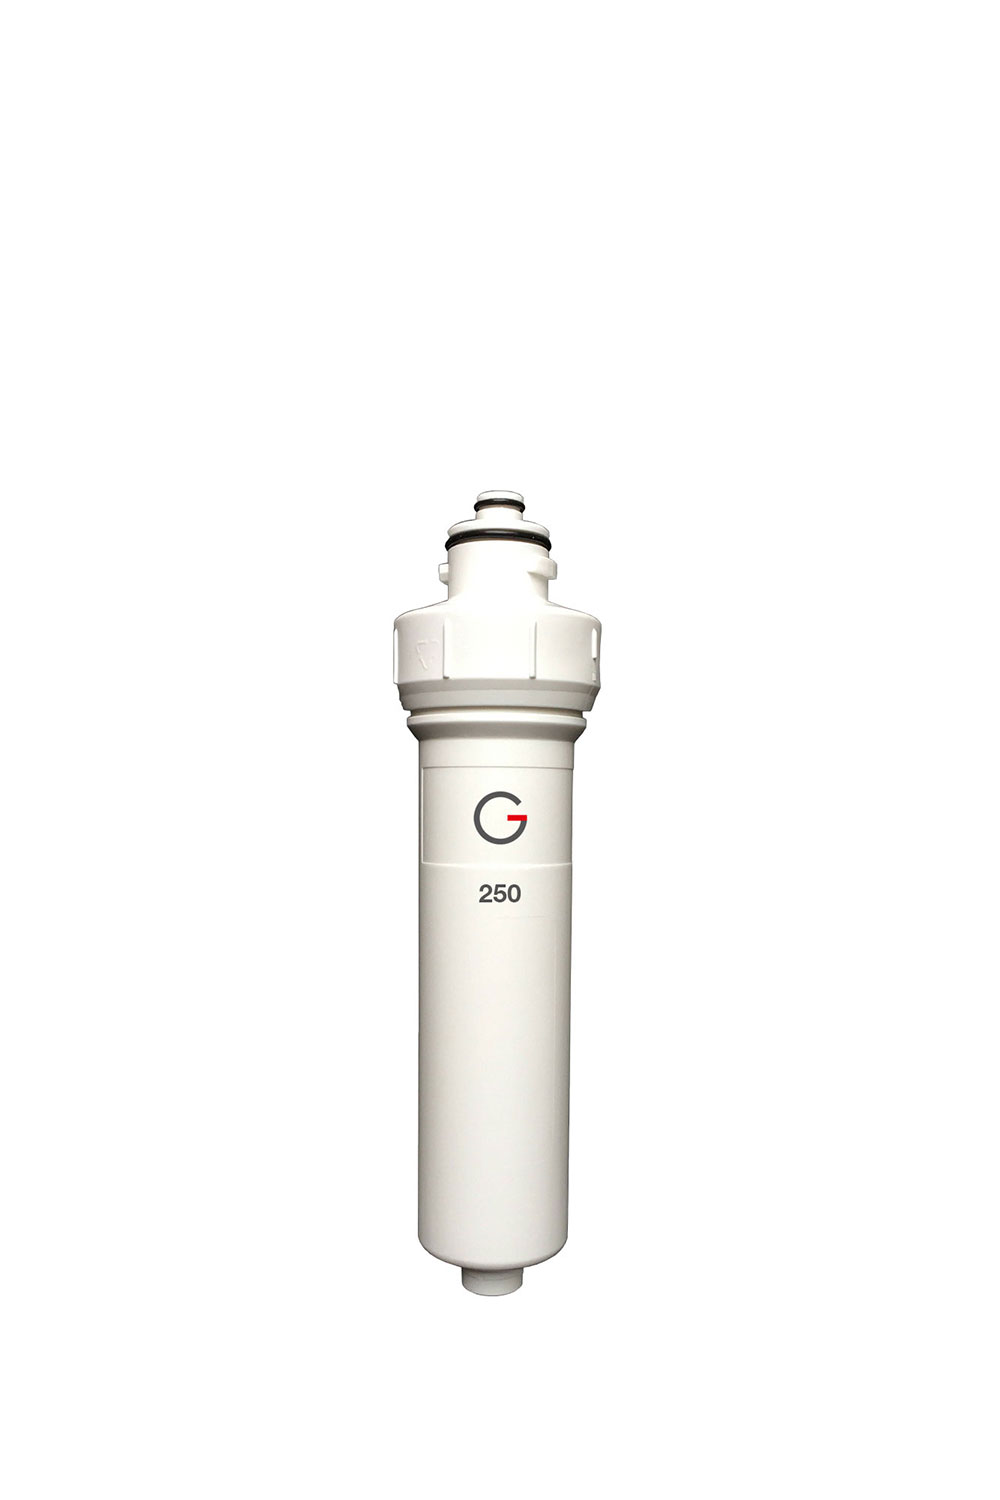 Geyser Filter Water Cartridge